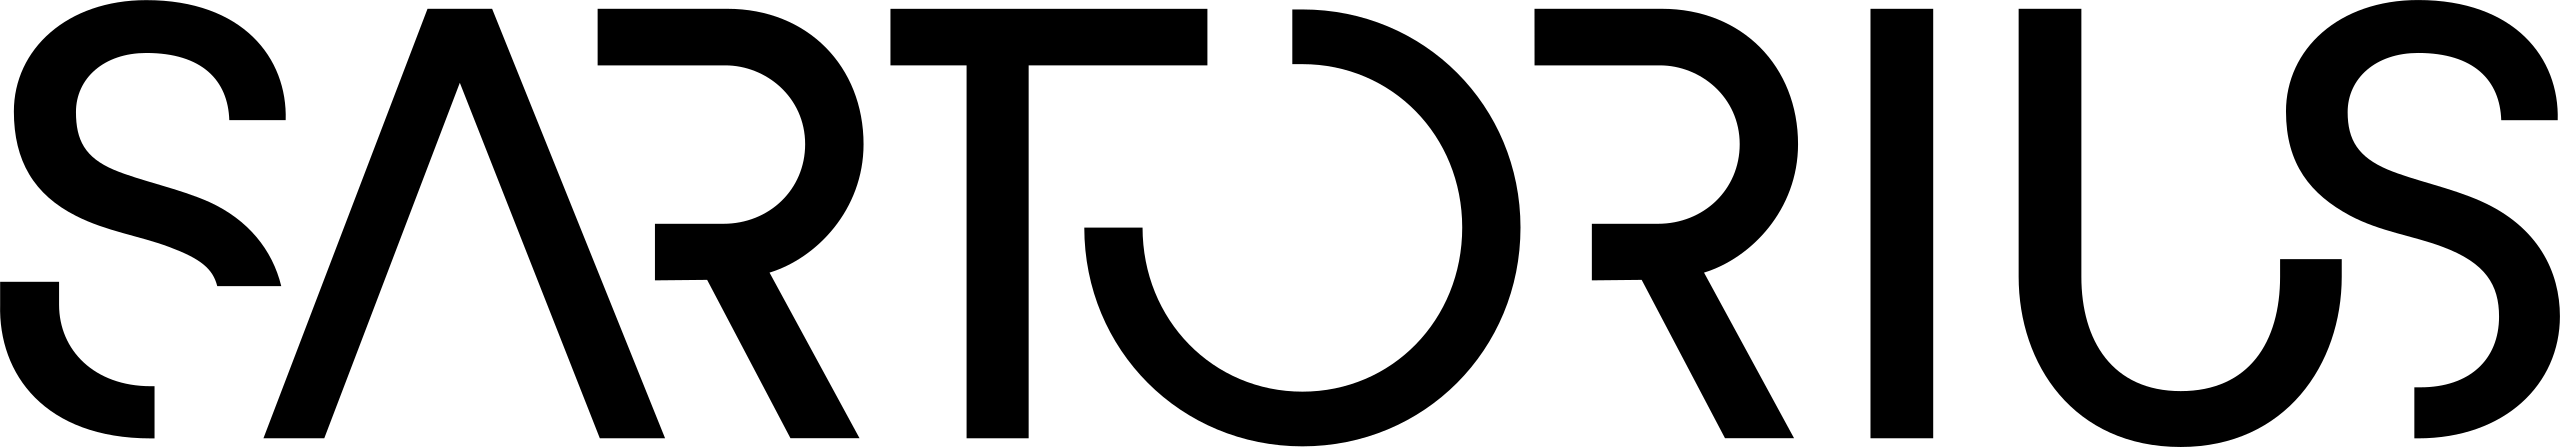 Sartorius-Logo-2020.svg